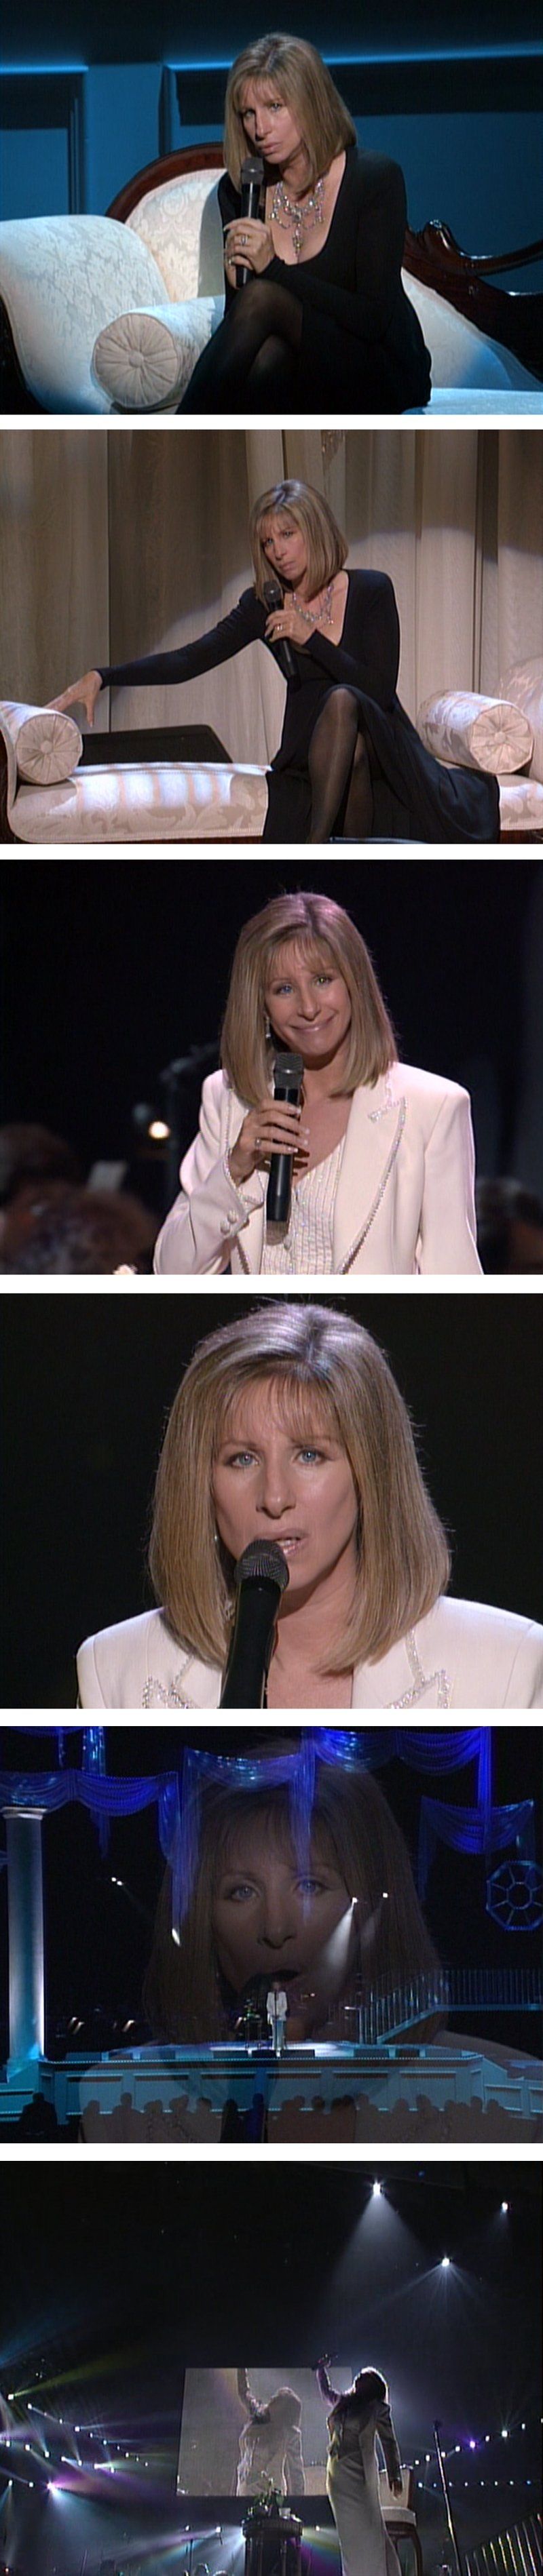 Photos of Streisand in concert